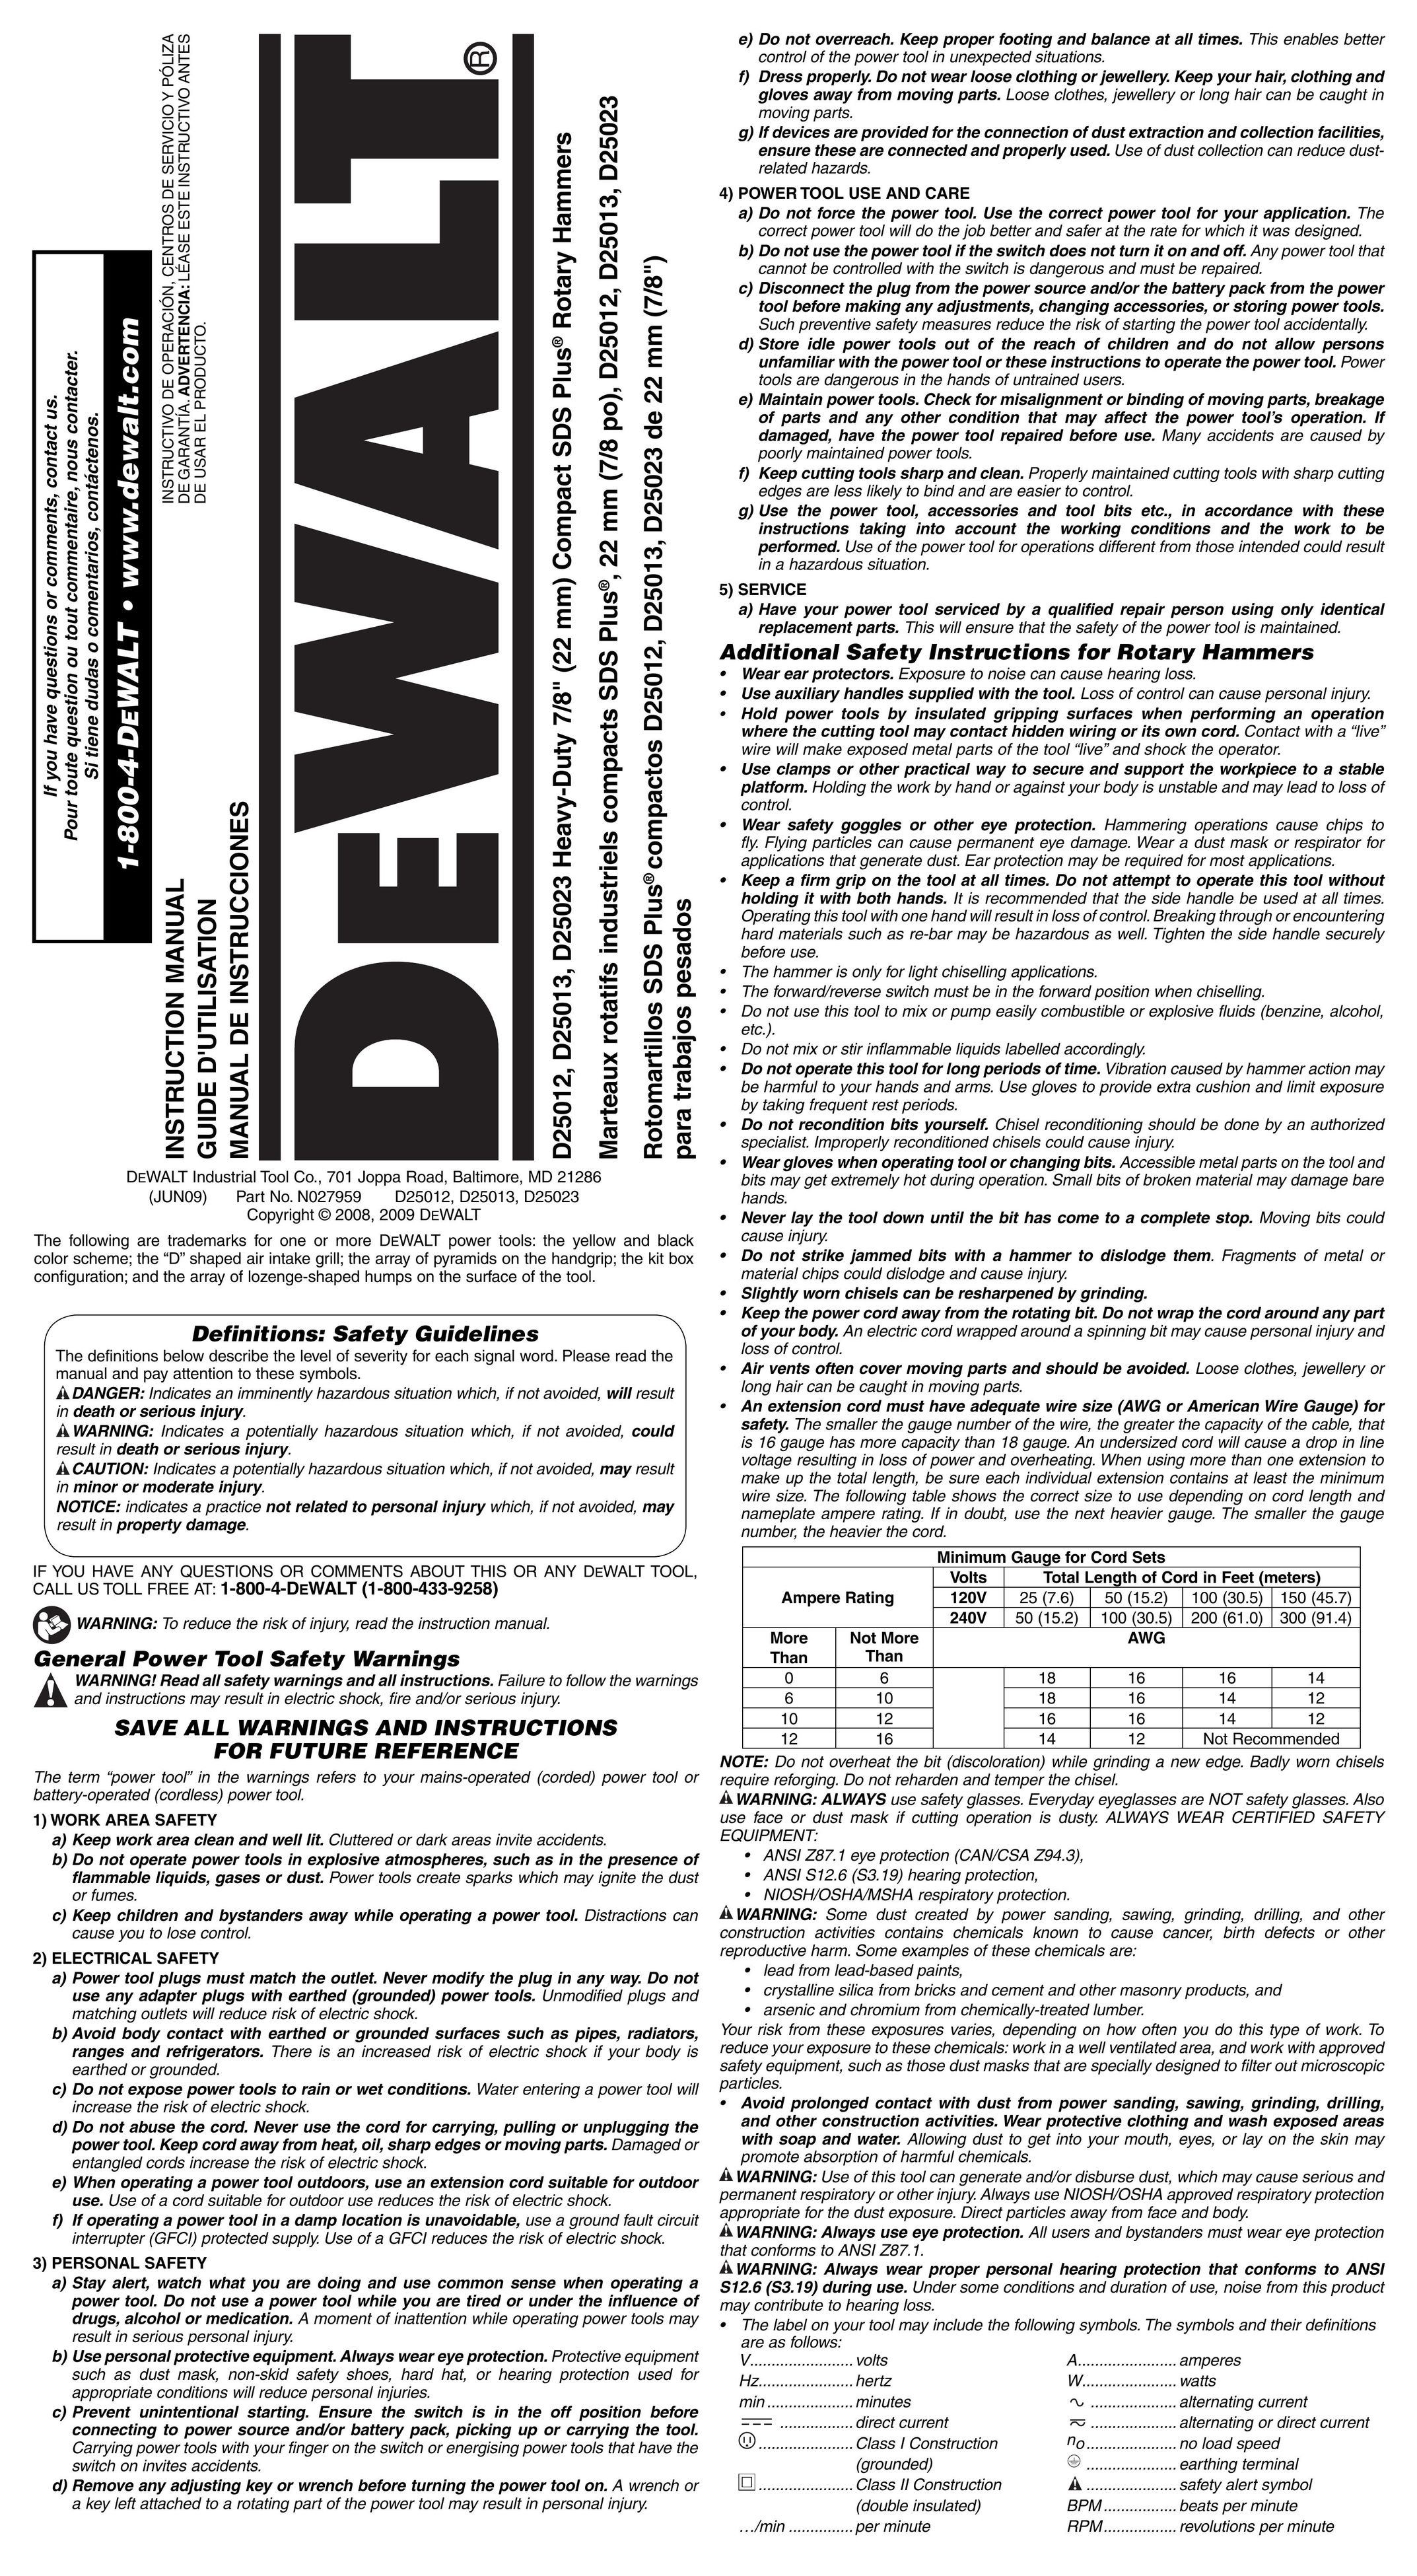 DeWalt D25012 Power Hammer User Manual